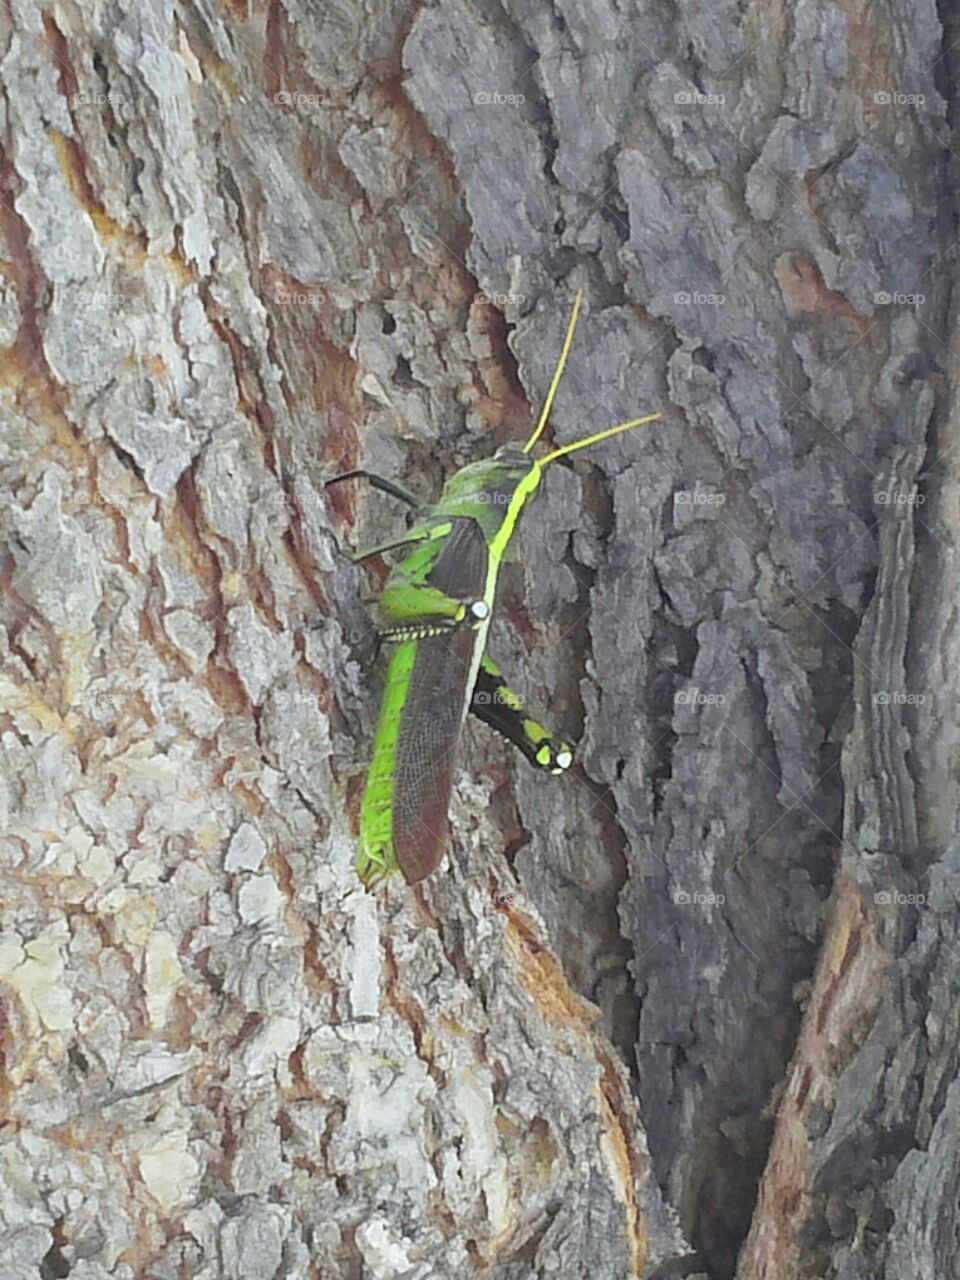 Grasshopper on a tree